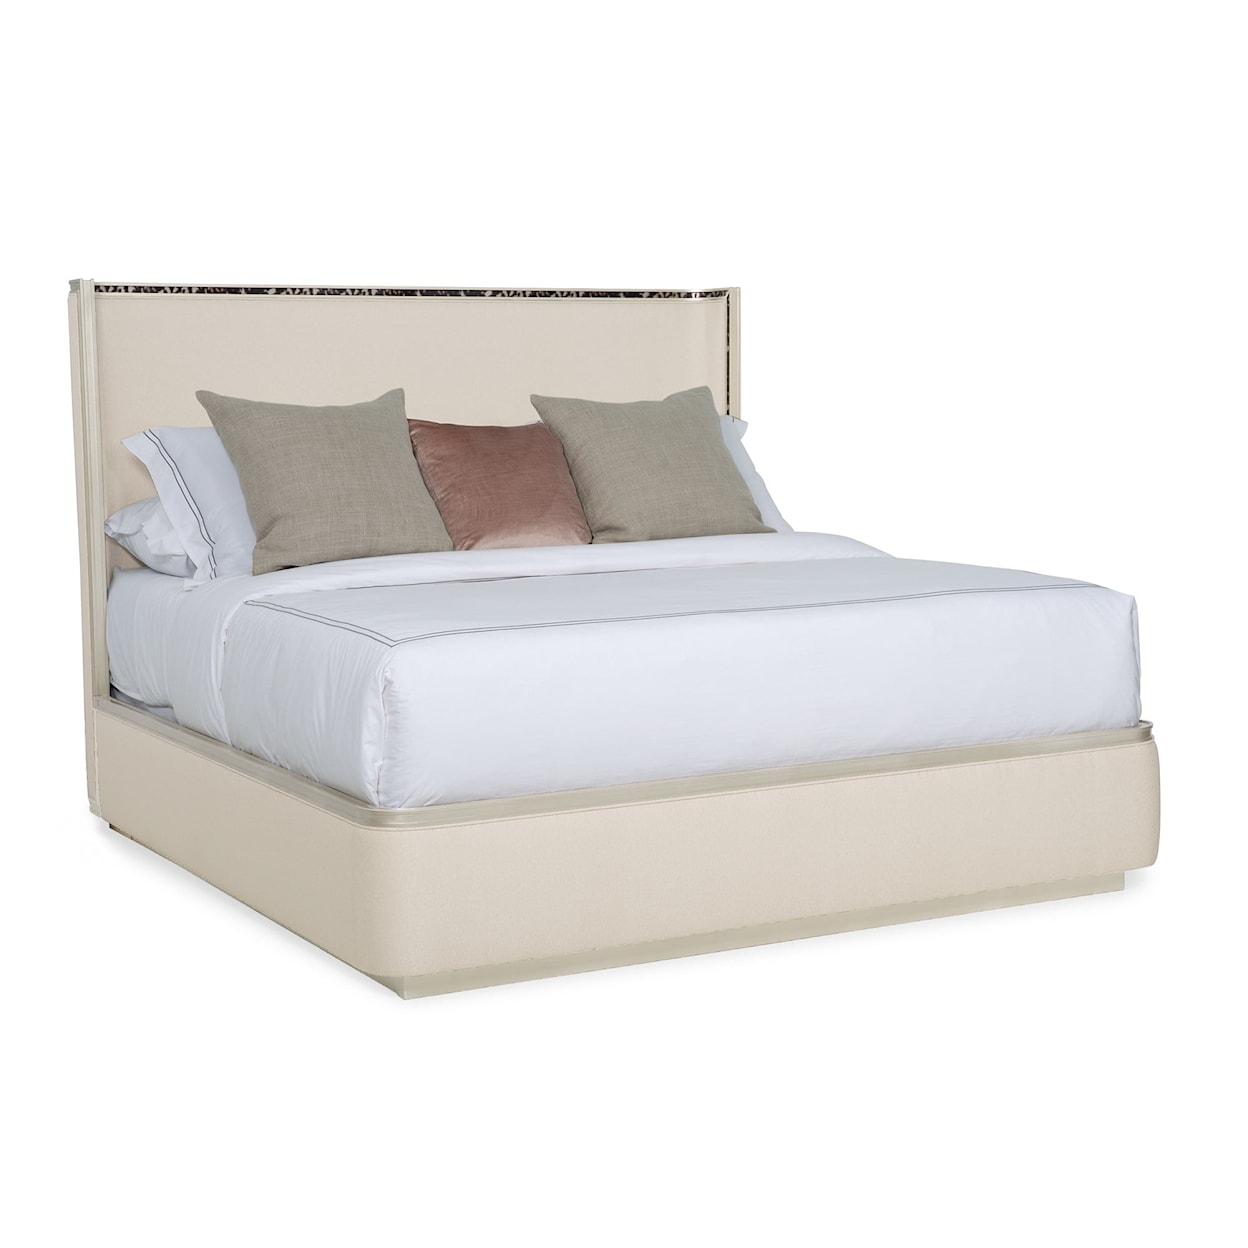 Caracole Caracole Classic Dream Big Queen Bed